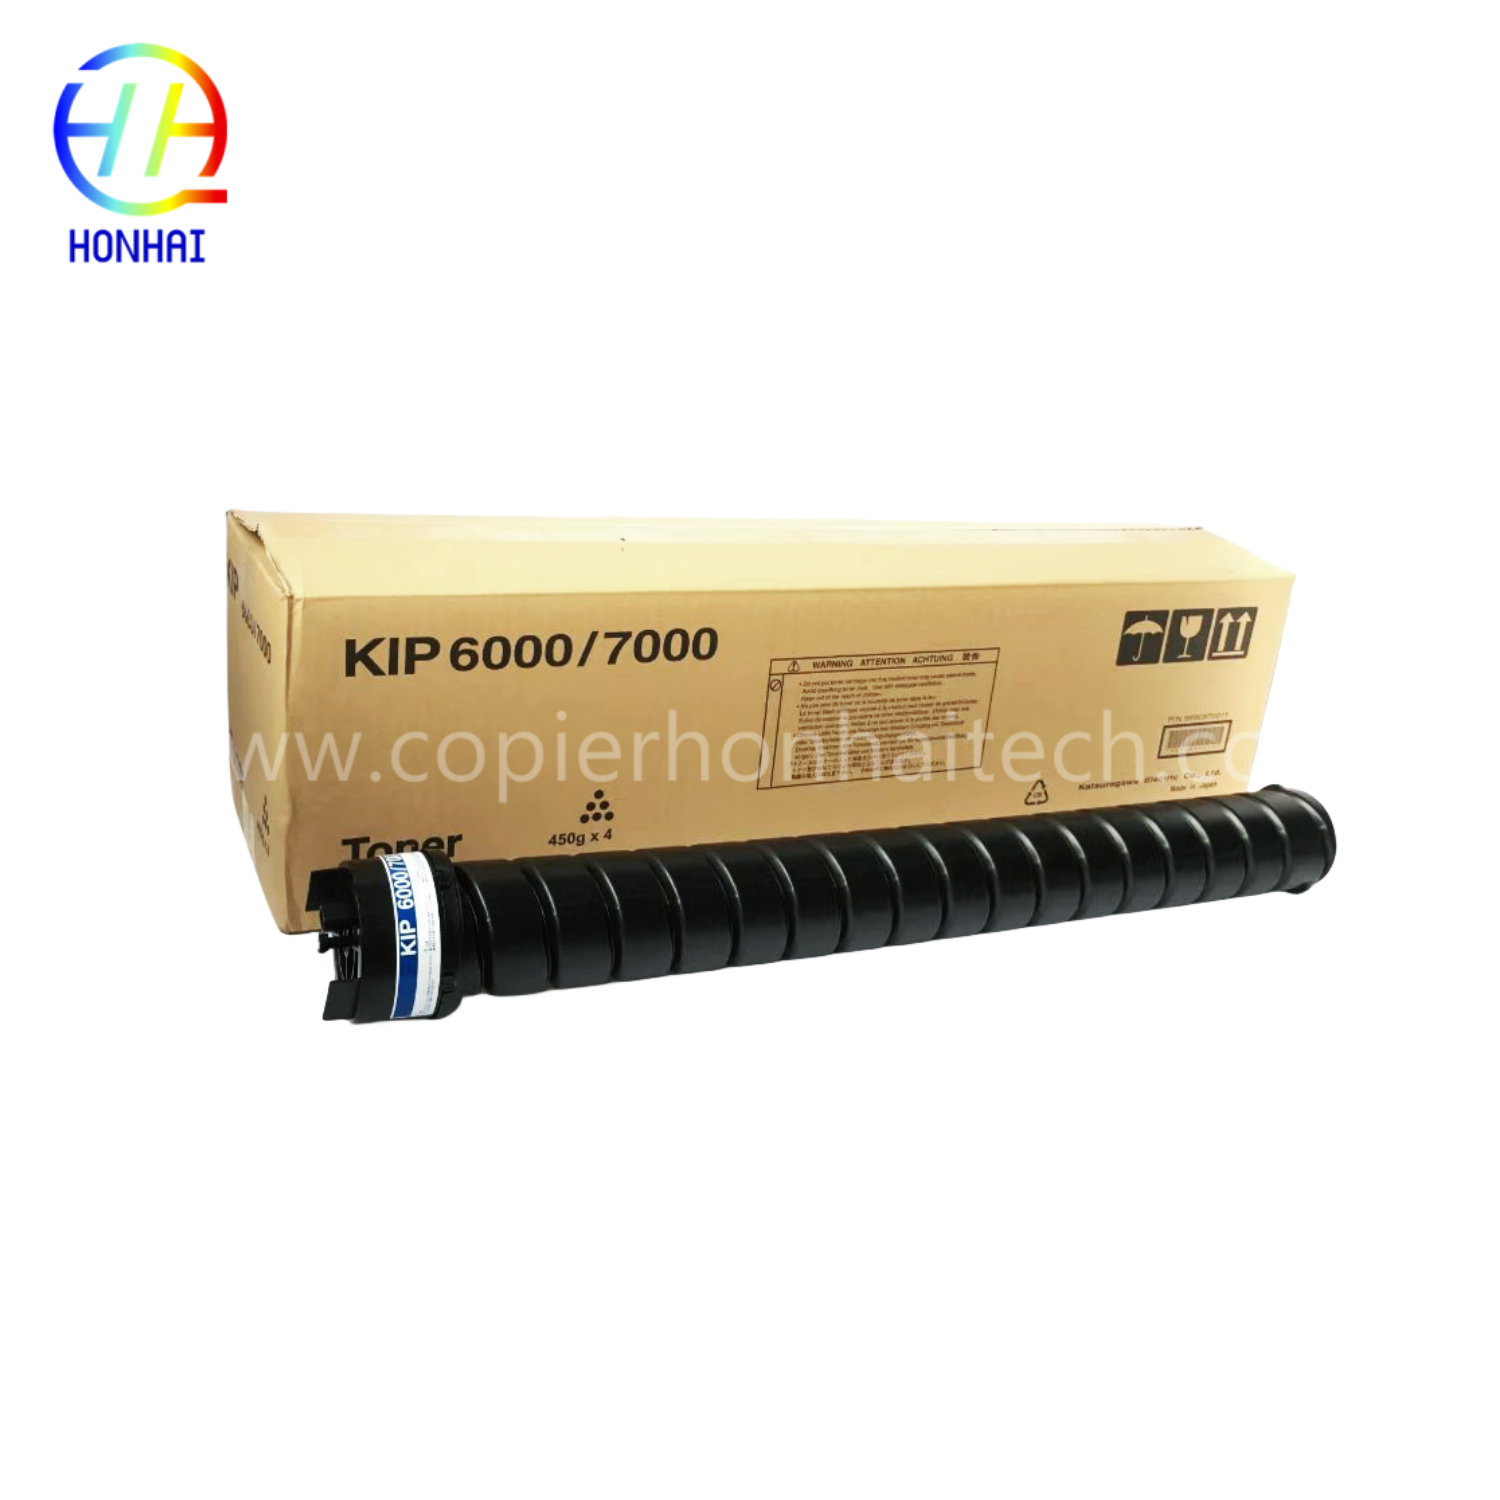 https://www.copierhonhaitech.com/toner-cartridge-kuri-kip-6000-7000-cyan-black-kip-toner-product/